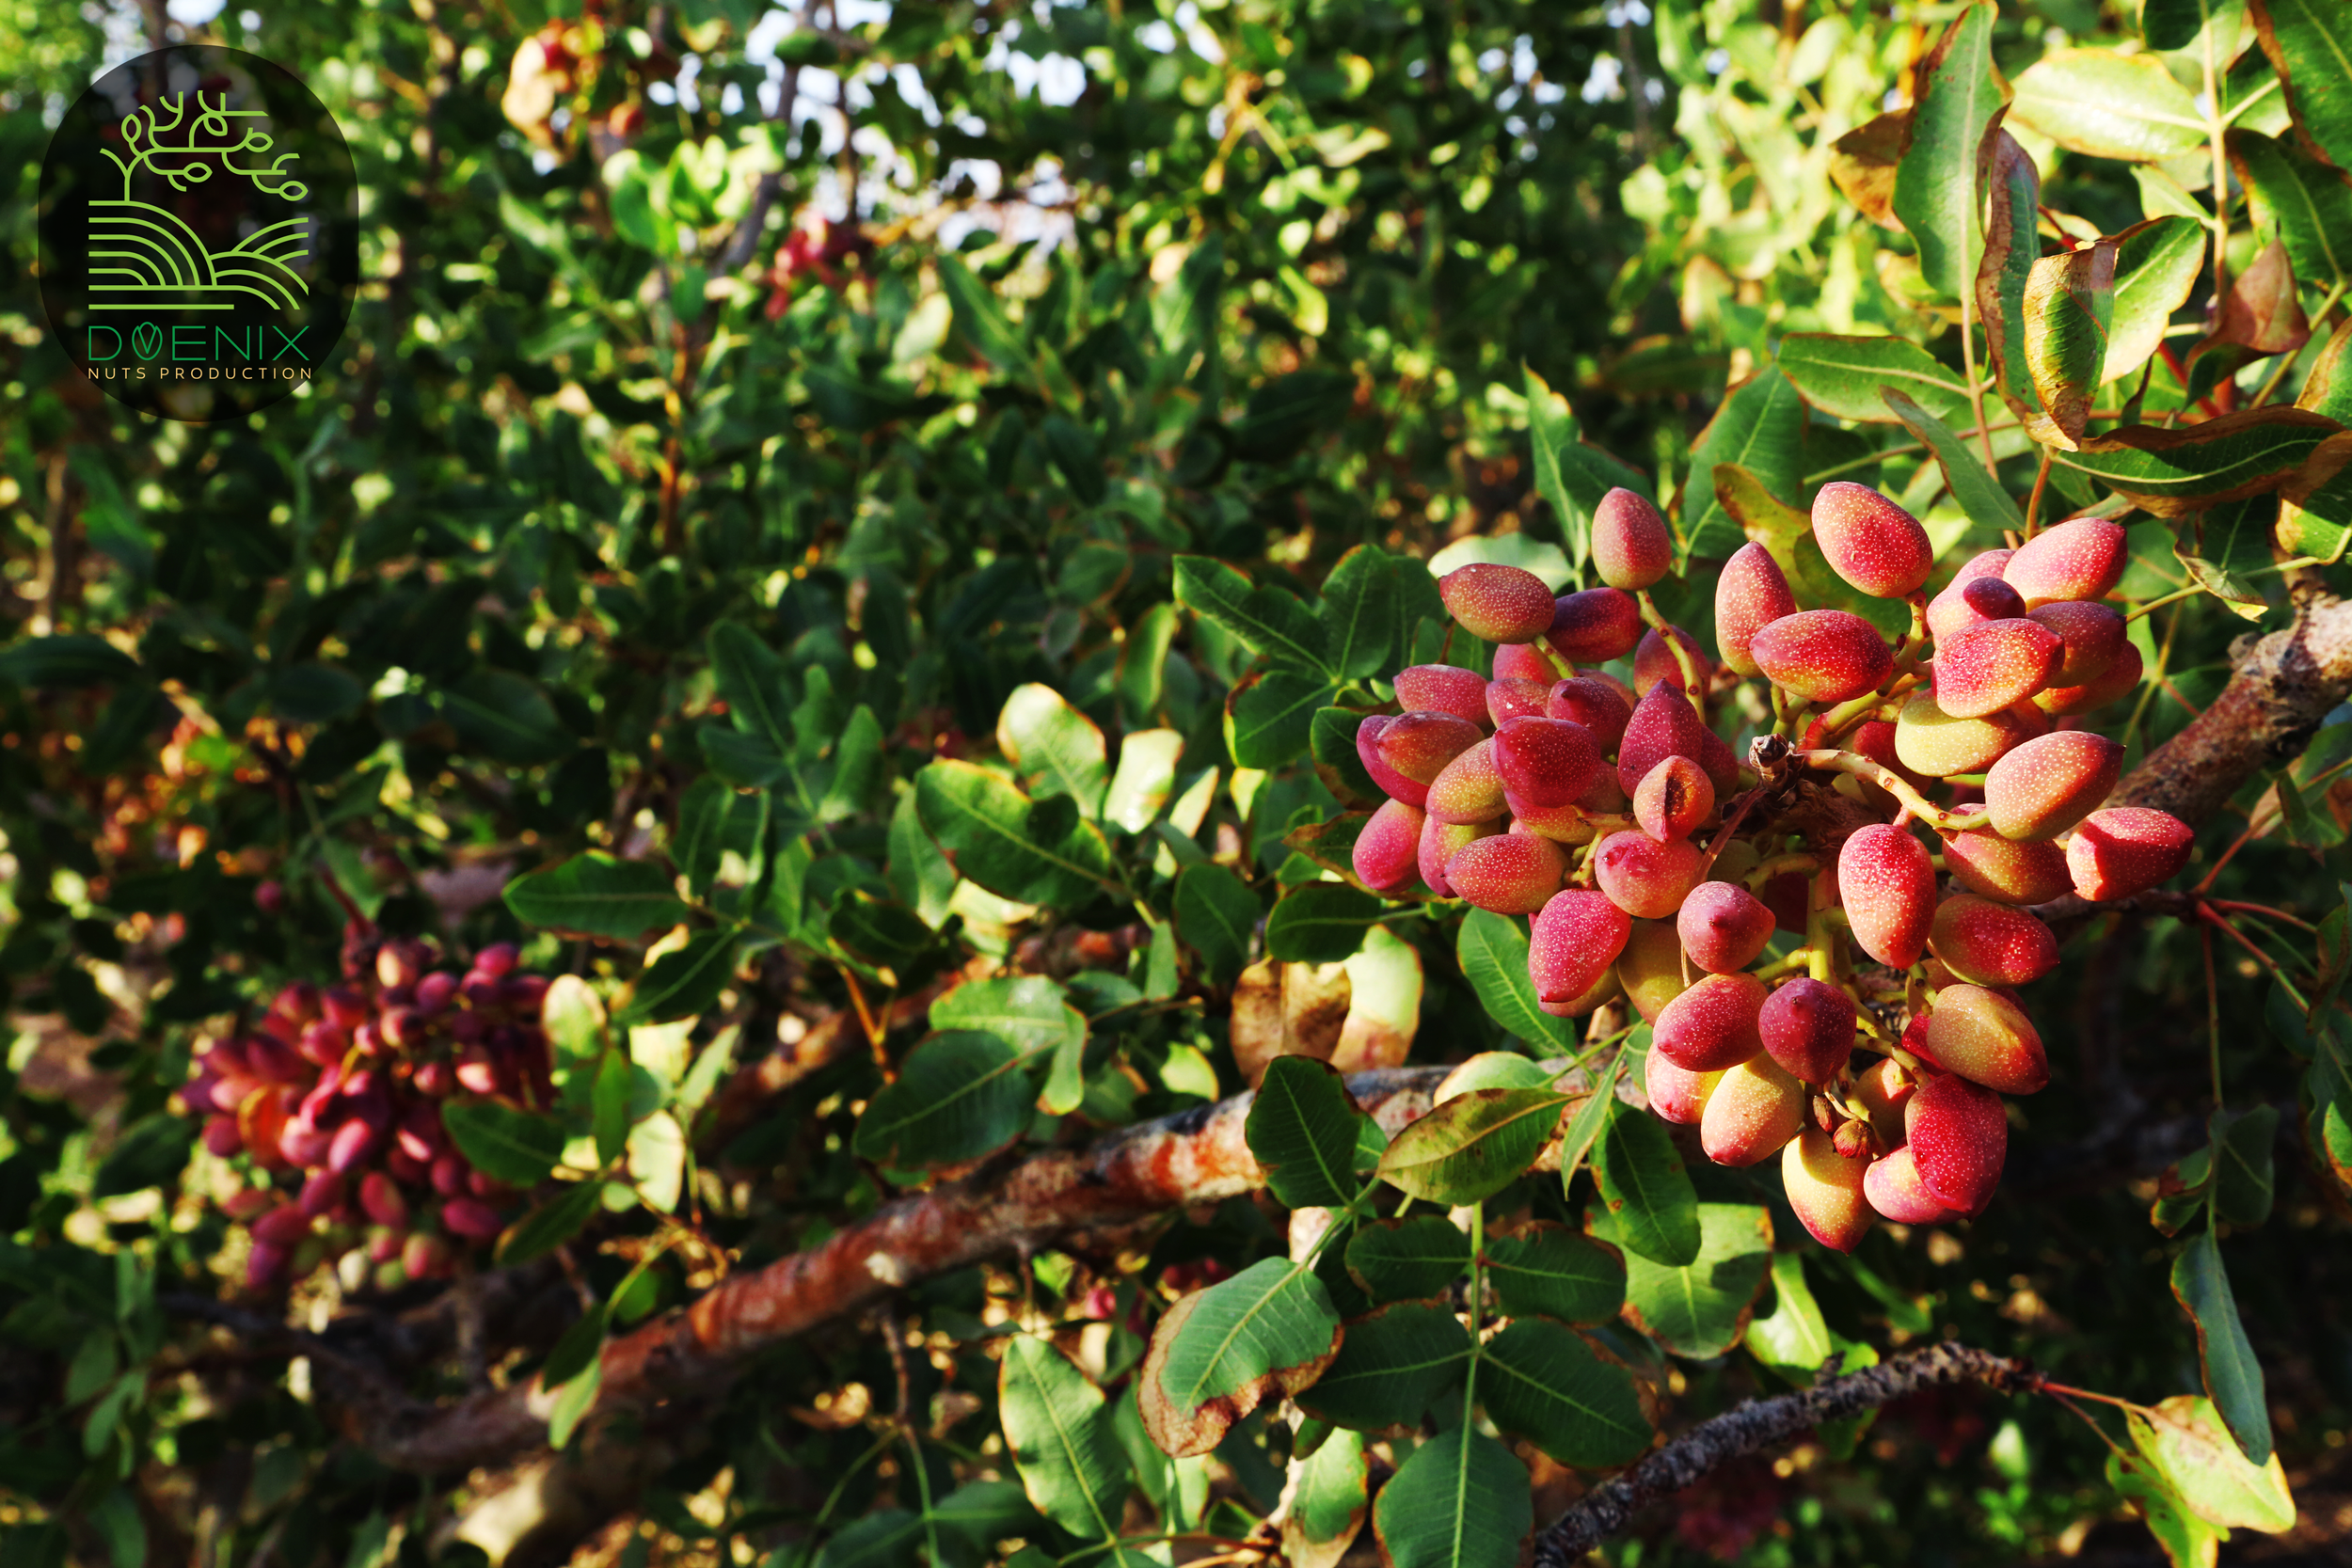 facts about pistachio tree - doenix nuts production